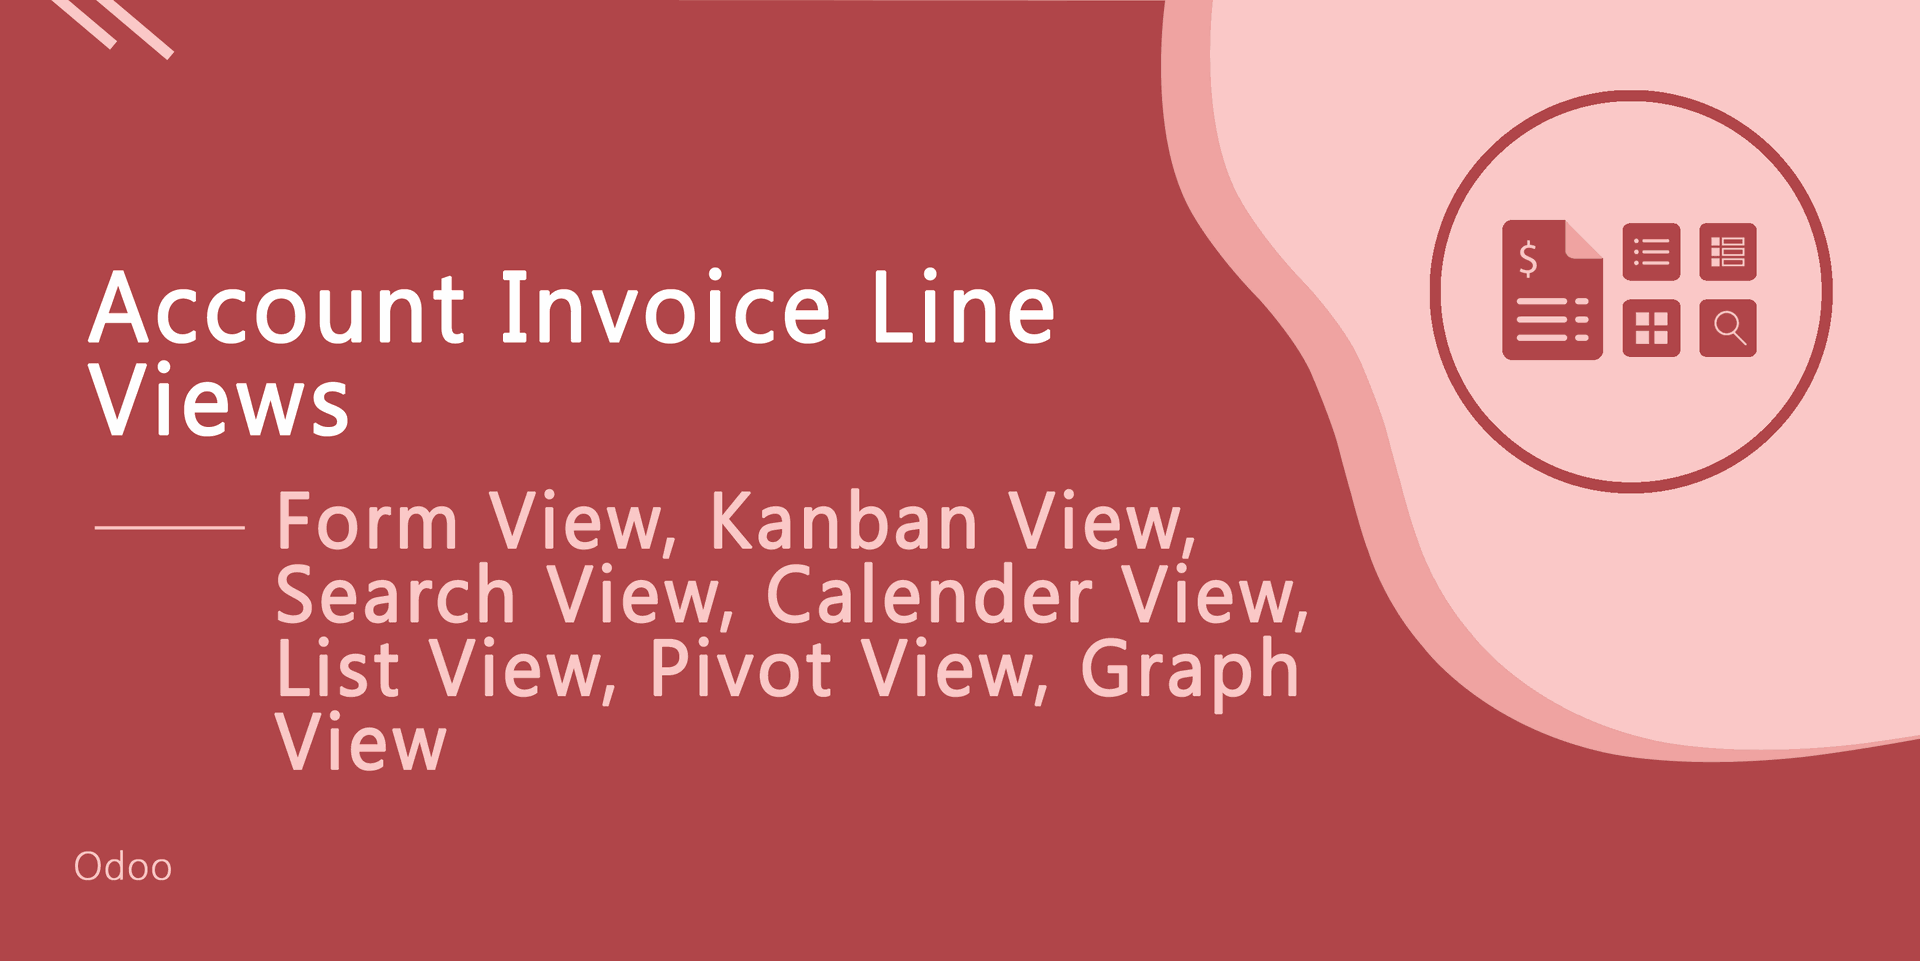 Account Invoice Line Views